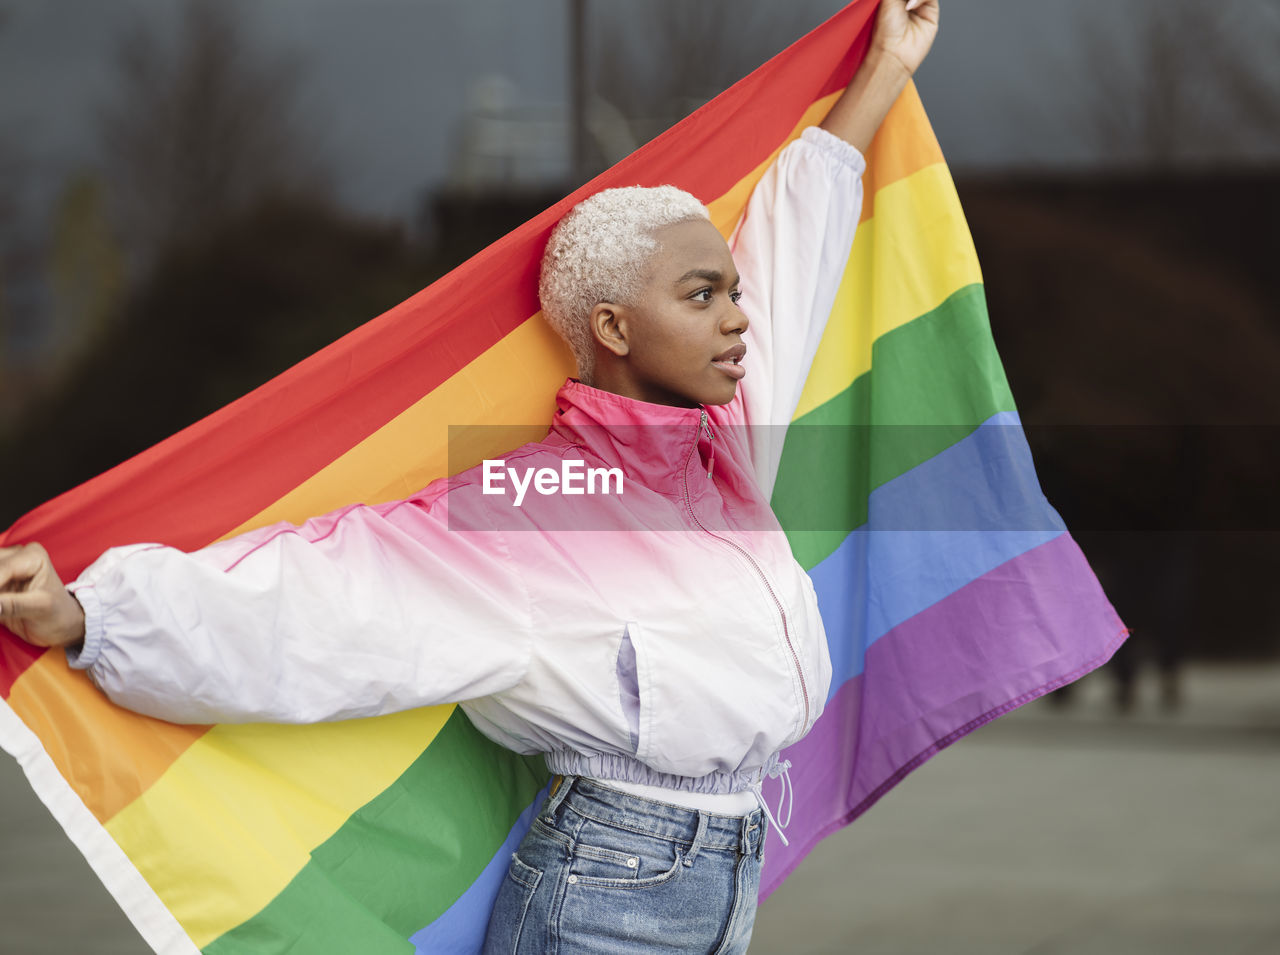 Confident lgbtqia woman holding rainbow flag